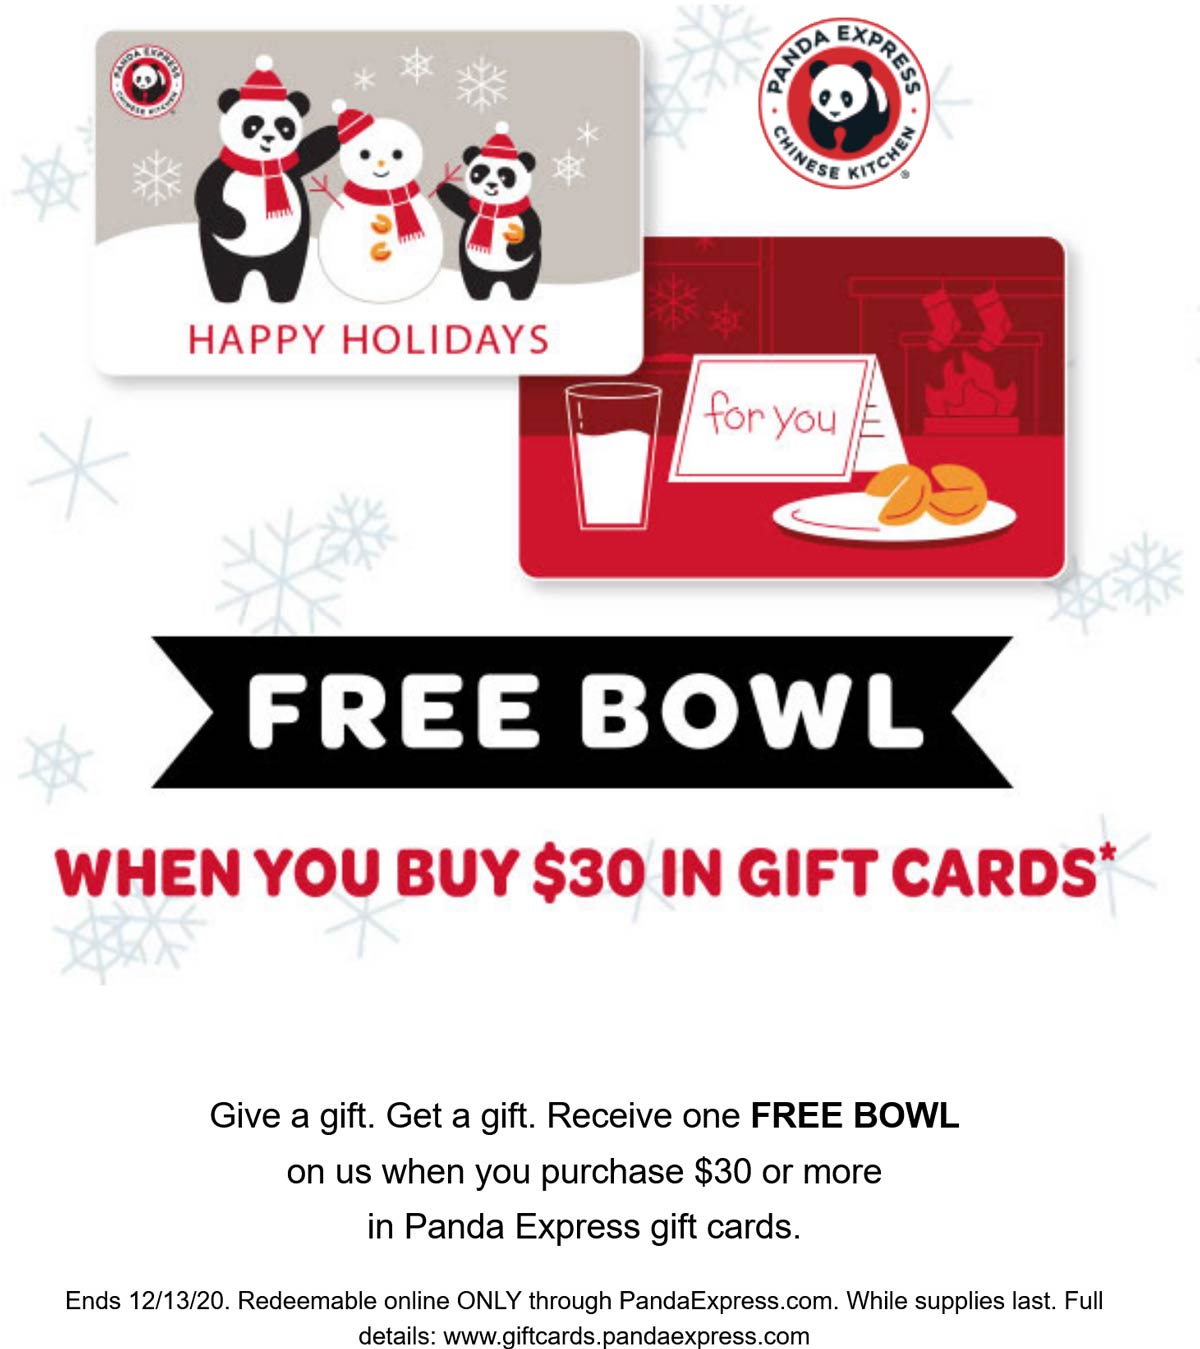 Panda Express restaurants Coupon  Free bowl with your $30 gift card at Panda Express restaurants #pandaexpress 